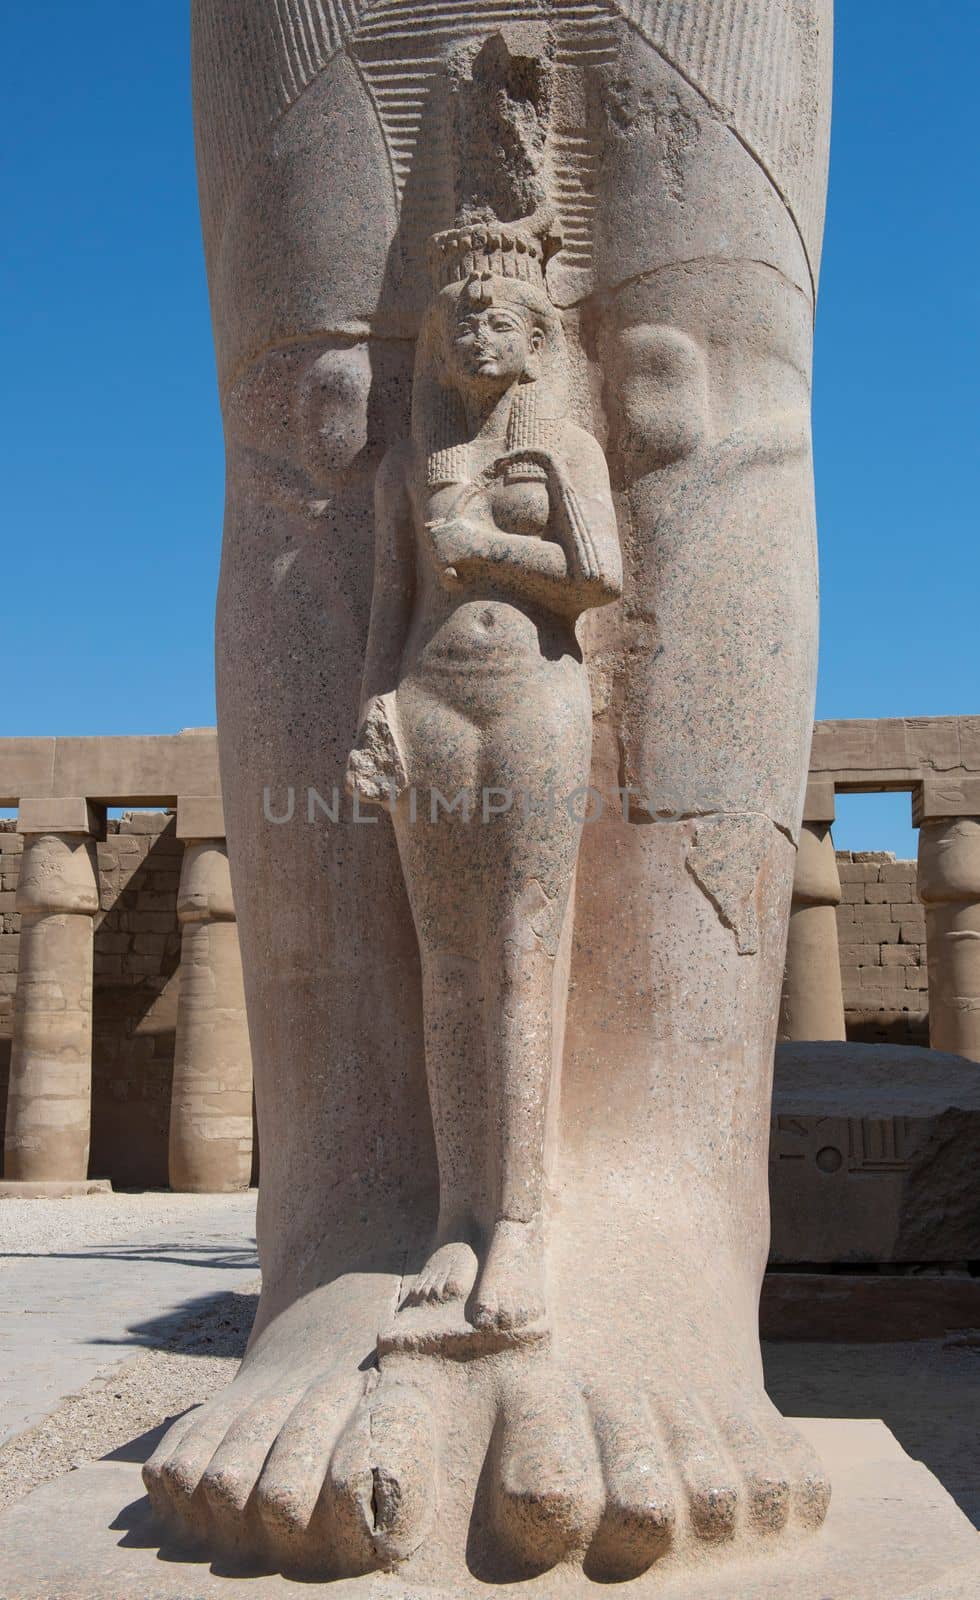 Large statues of Queen Nefertari at Karnak temple in Egypt by paulvinten